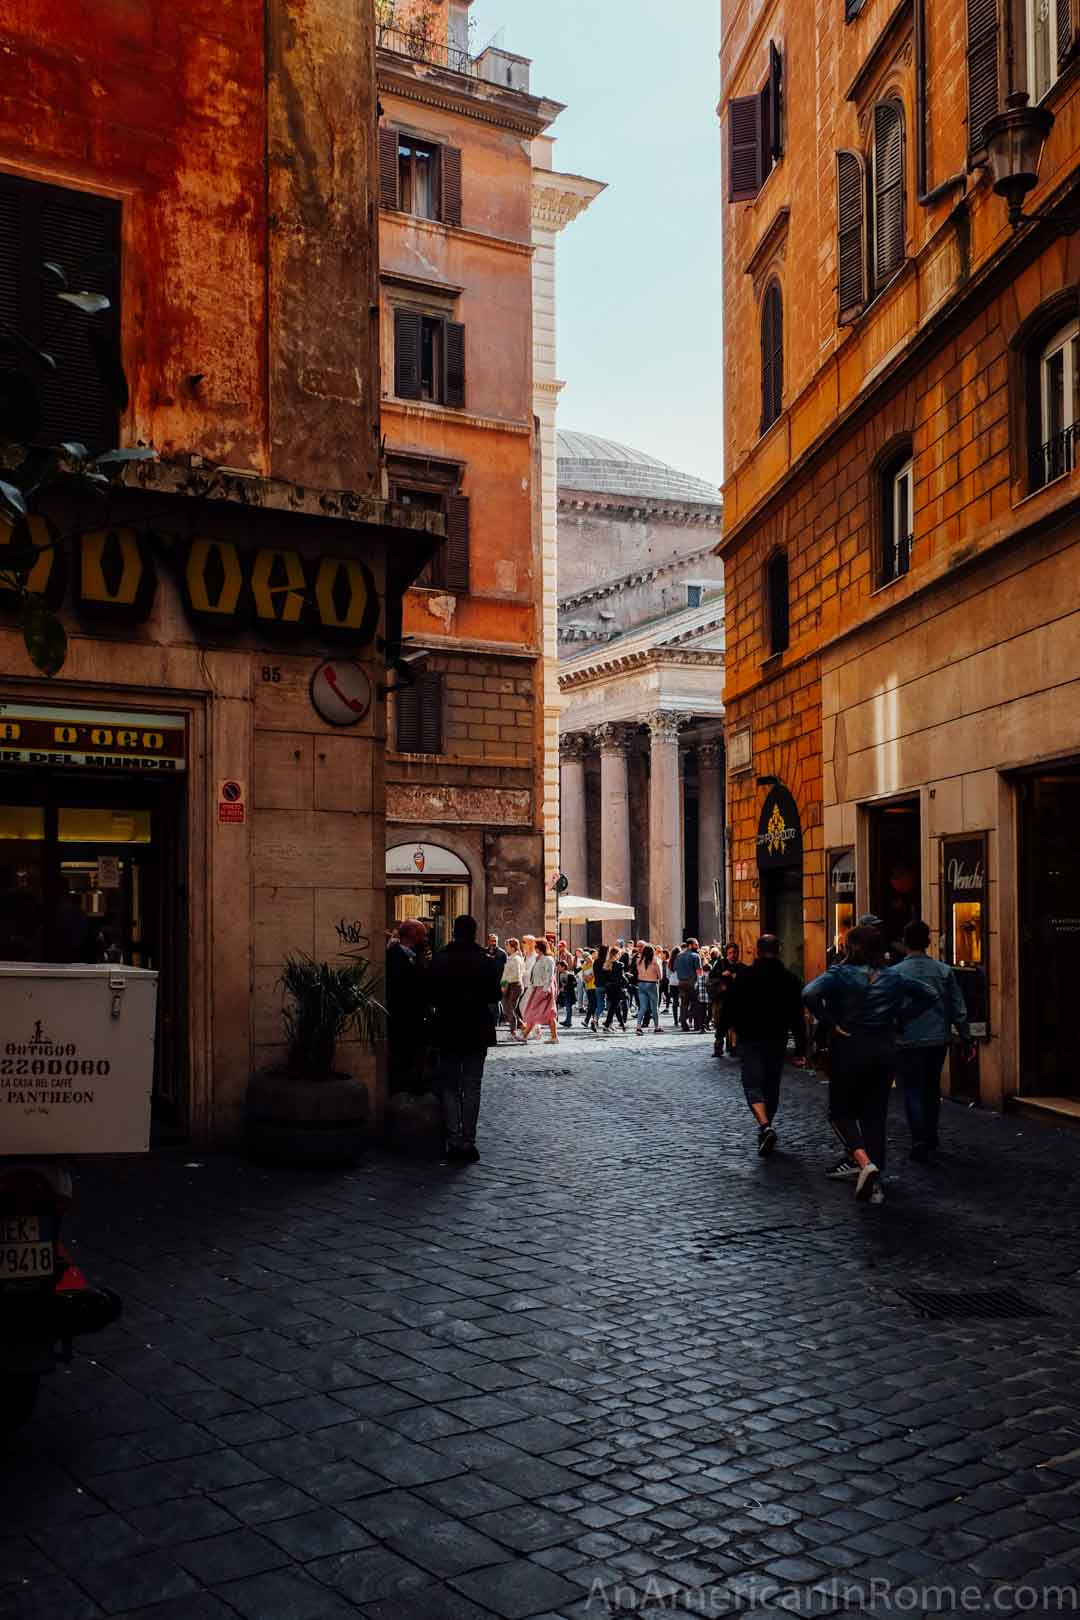 View of the Pantheon down a Roman street